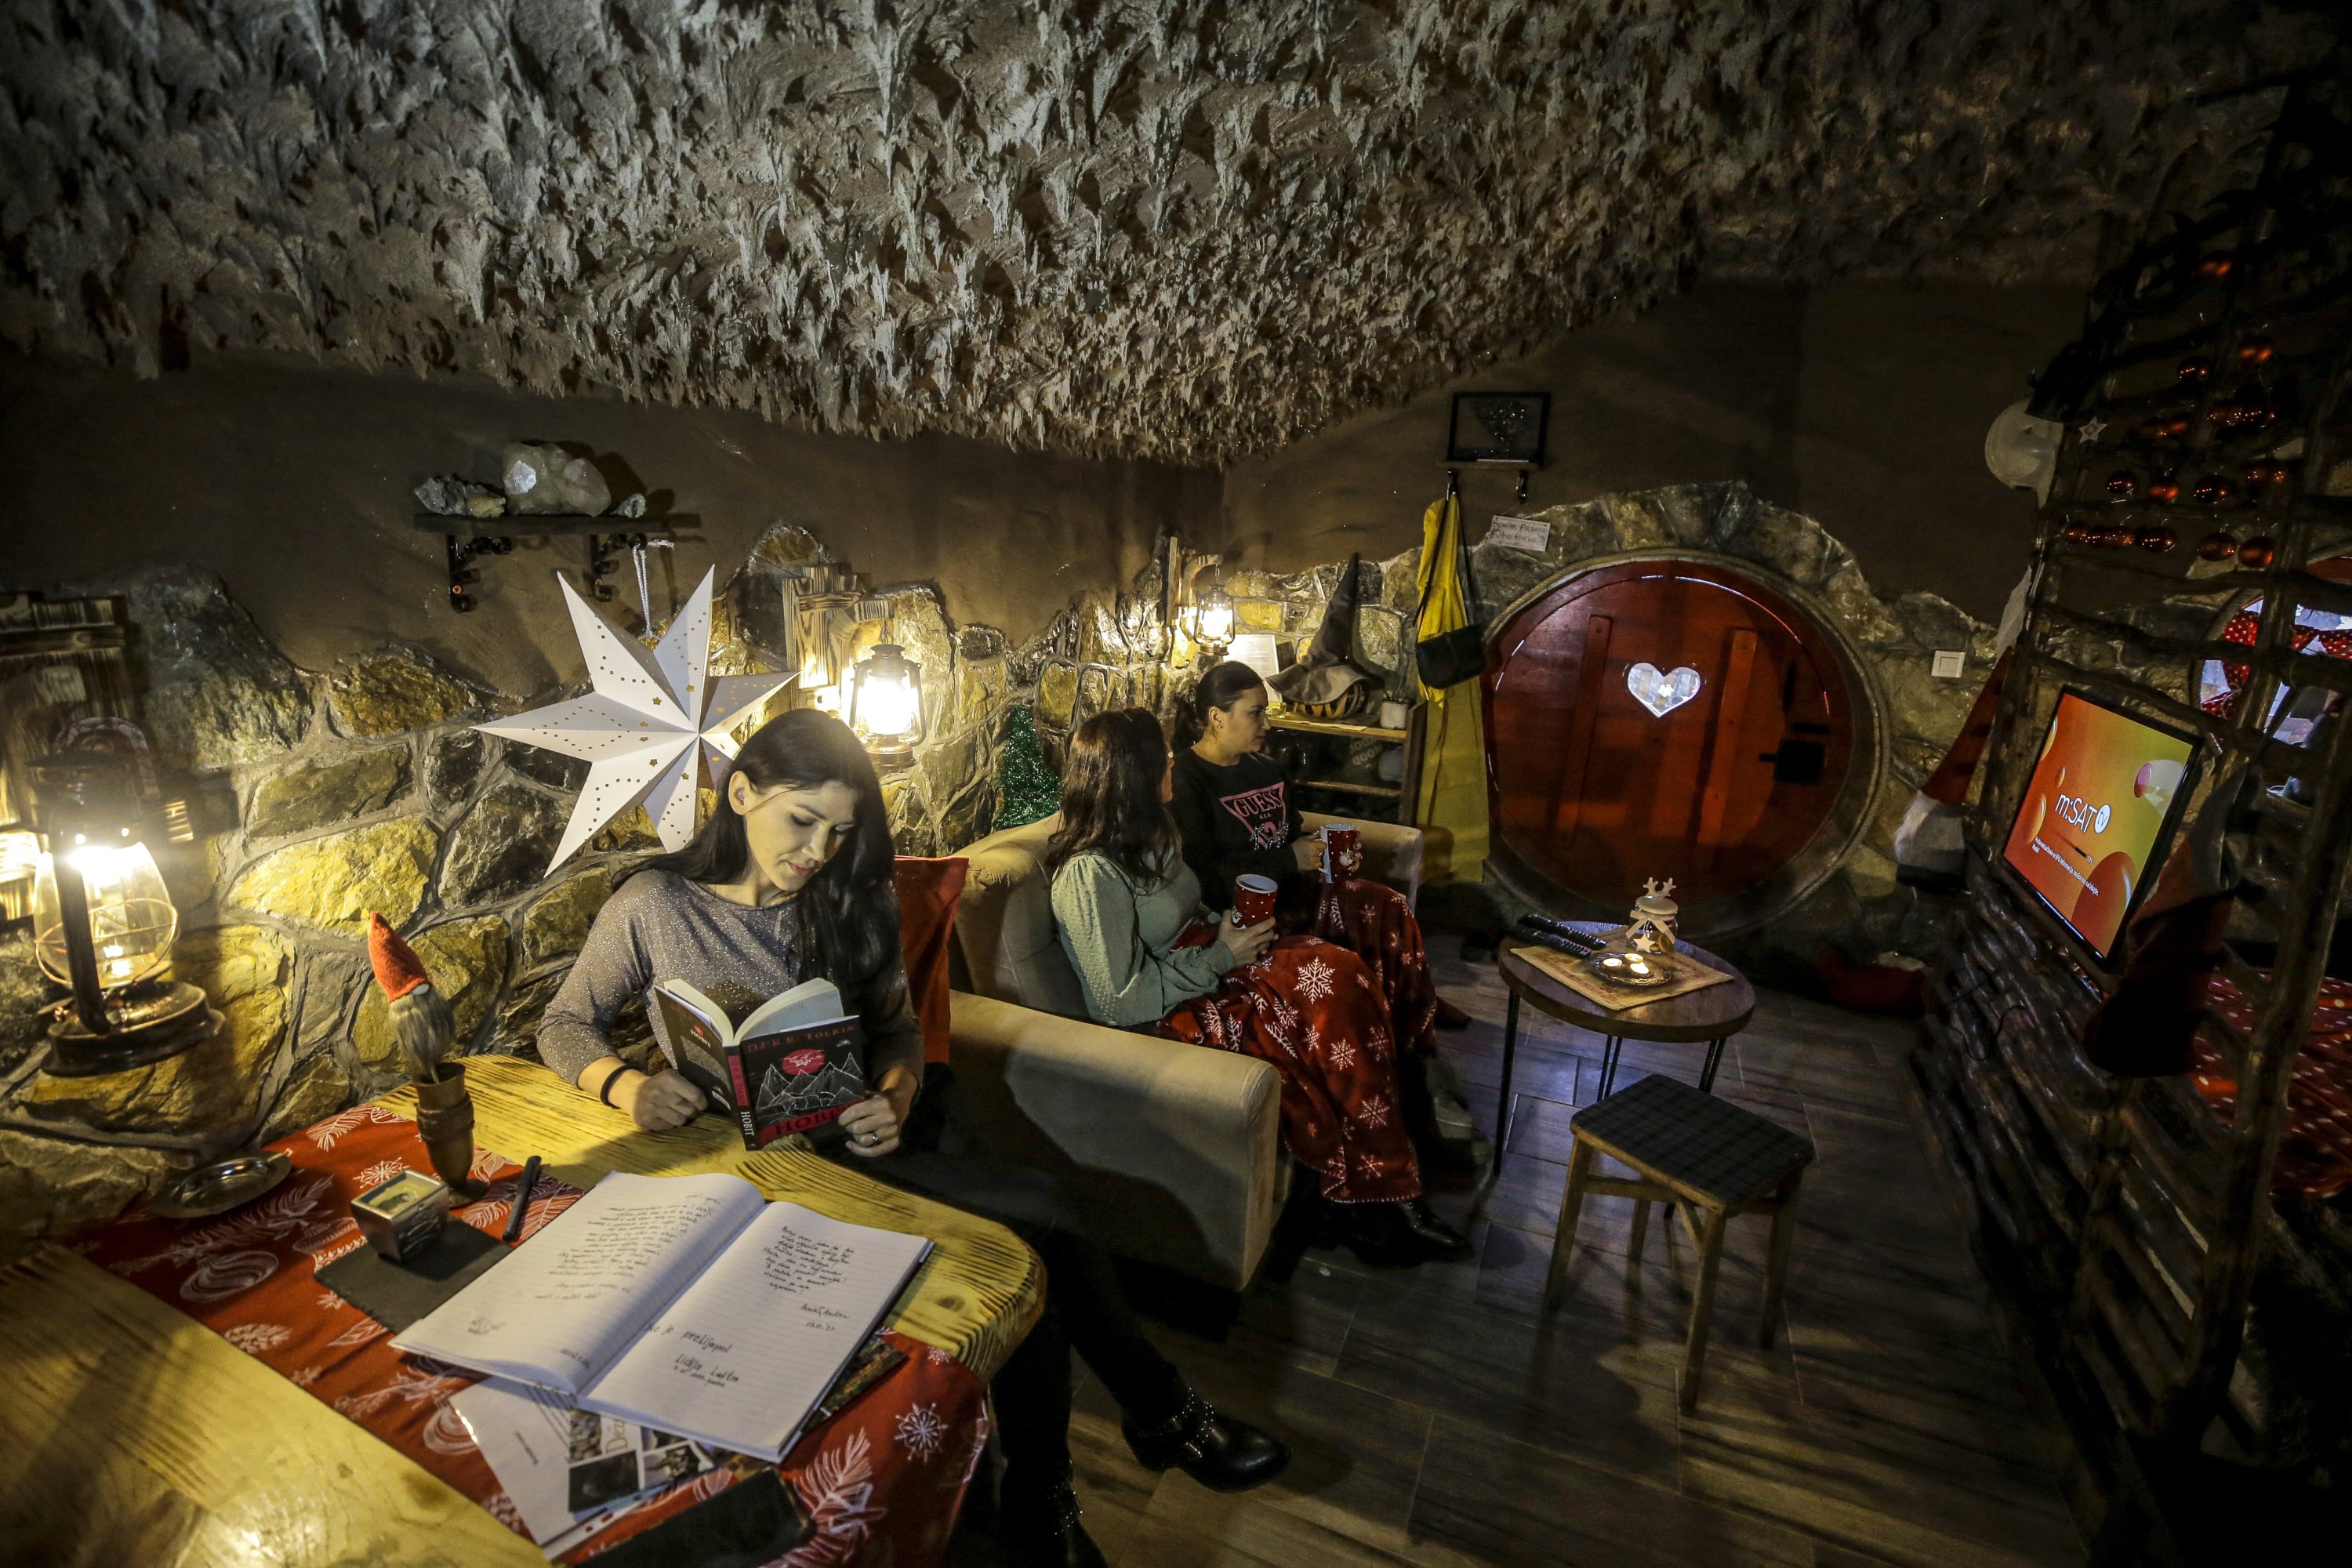 The interior of one of the hobbit houses built in Kresevo, Bosnia-Herzegovina, Dec. 18, 2022. (AA Photo)